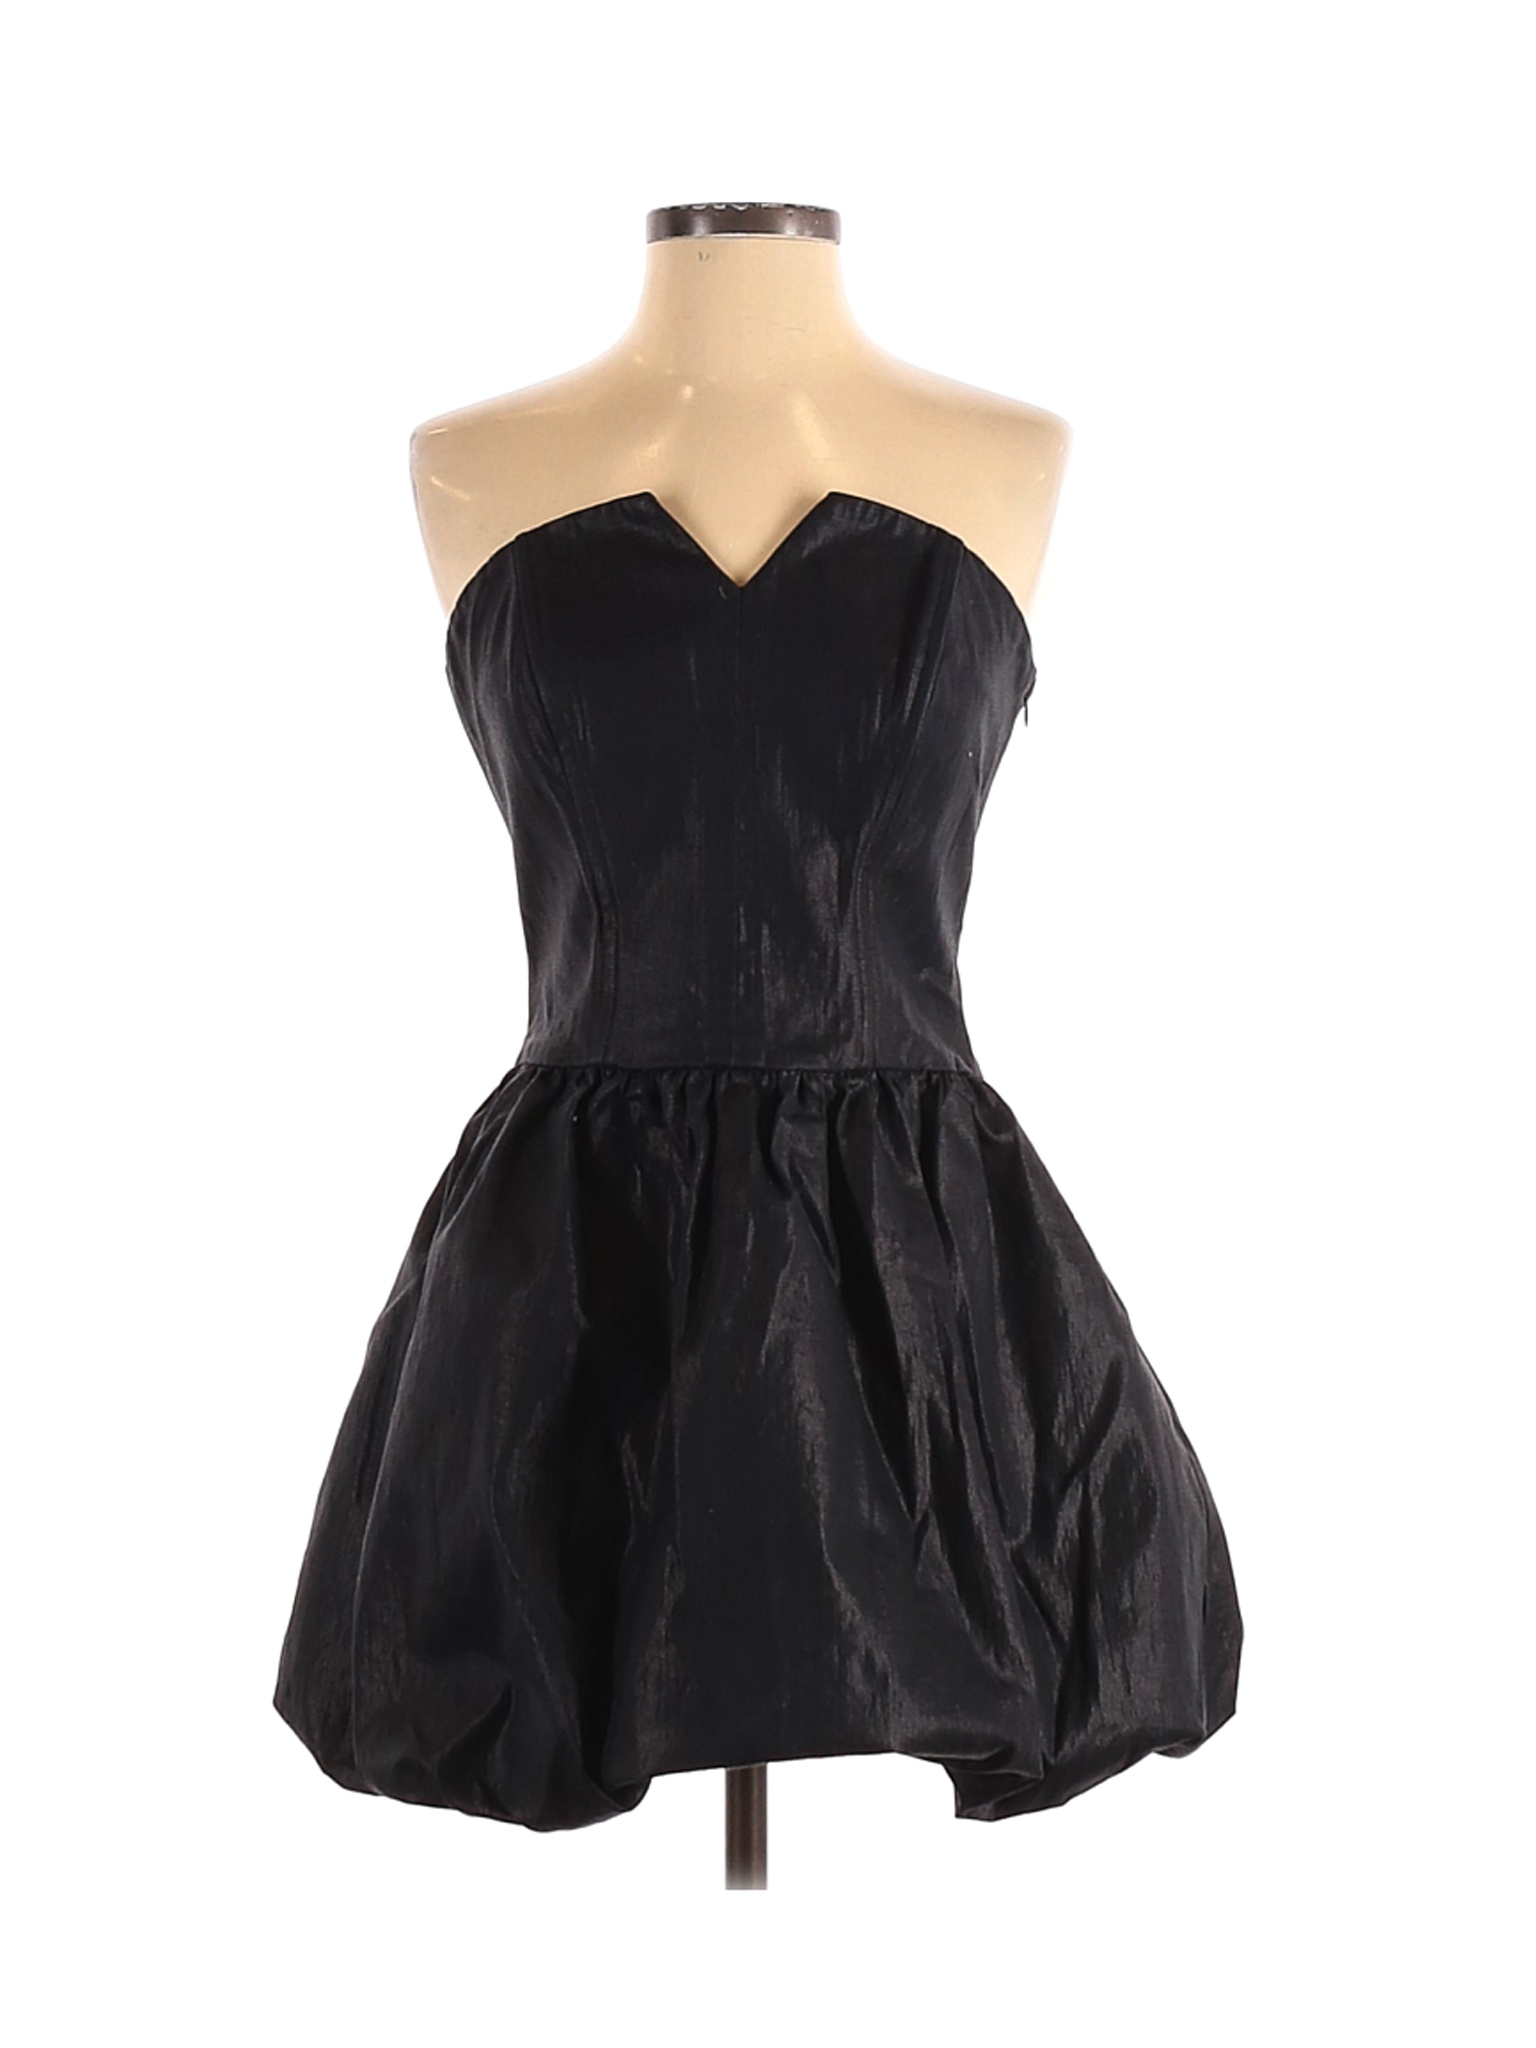 Betsey Johnson Women Black Cocktail Dress 6 | eBay